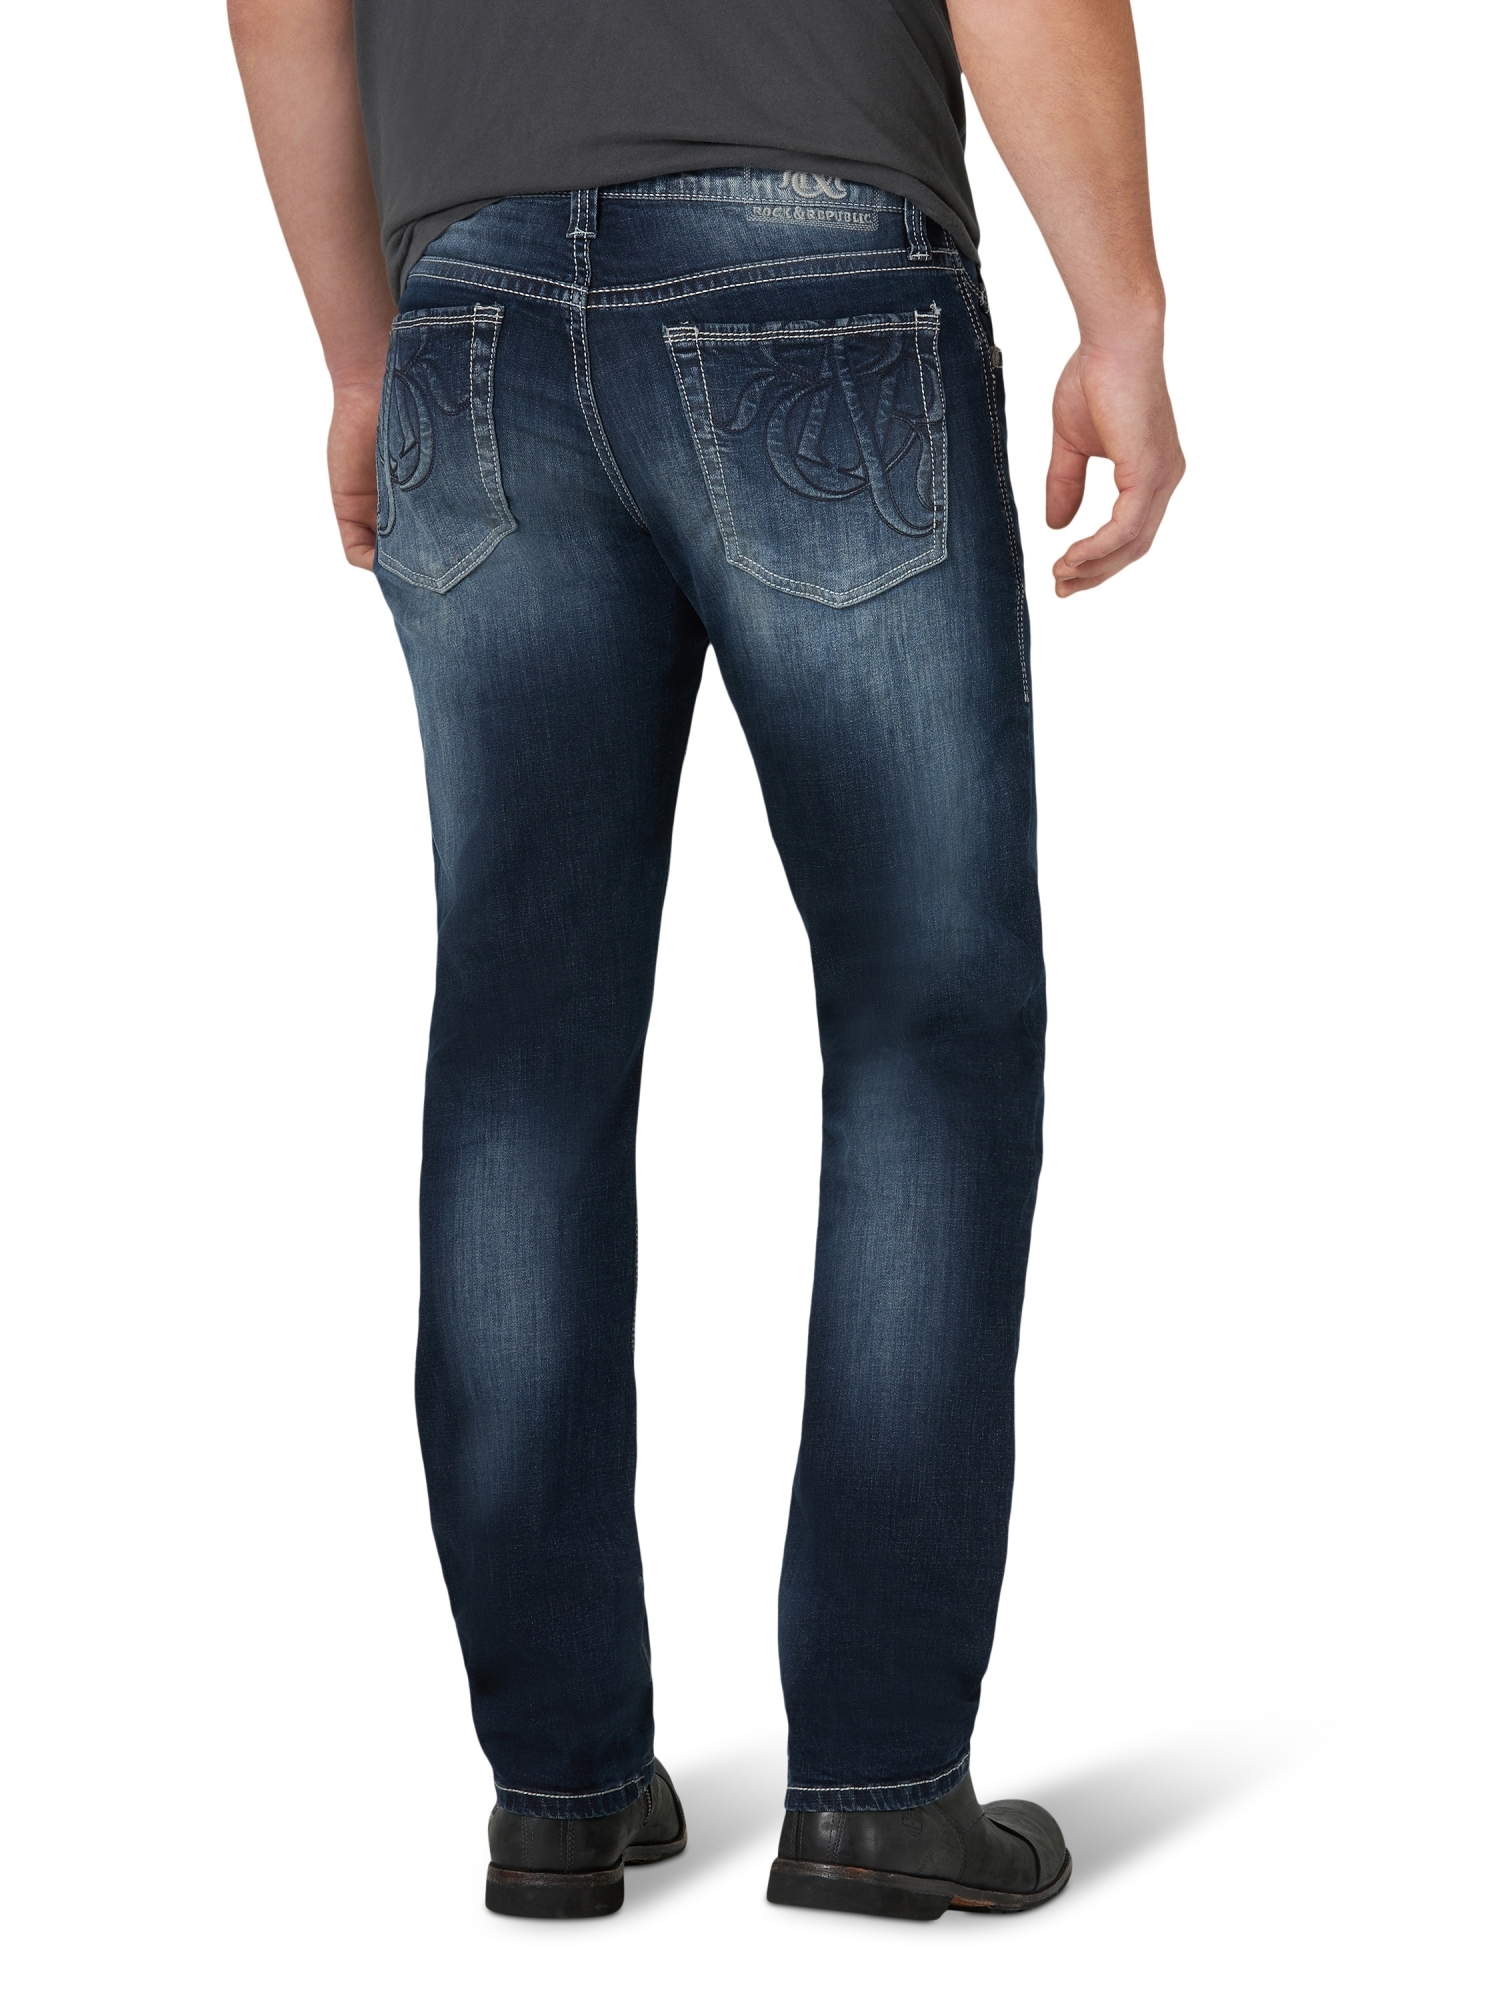 Rock & Republic Men's Slim Straight Jean with Ultra Comfort Denim - image 3 of 6